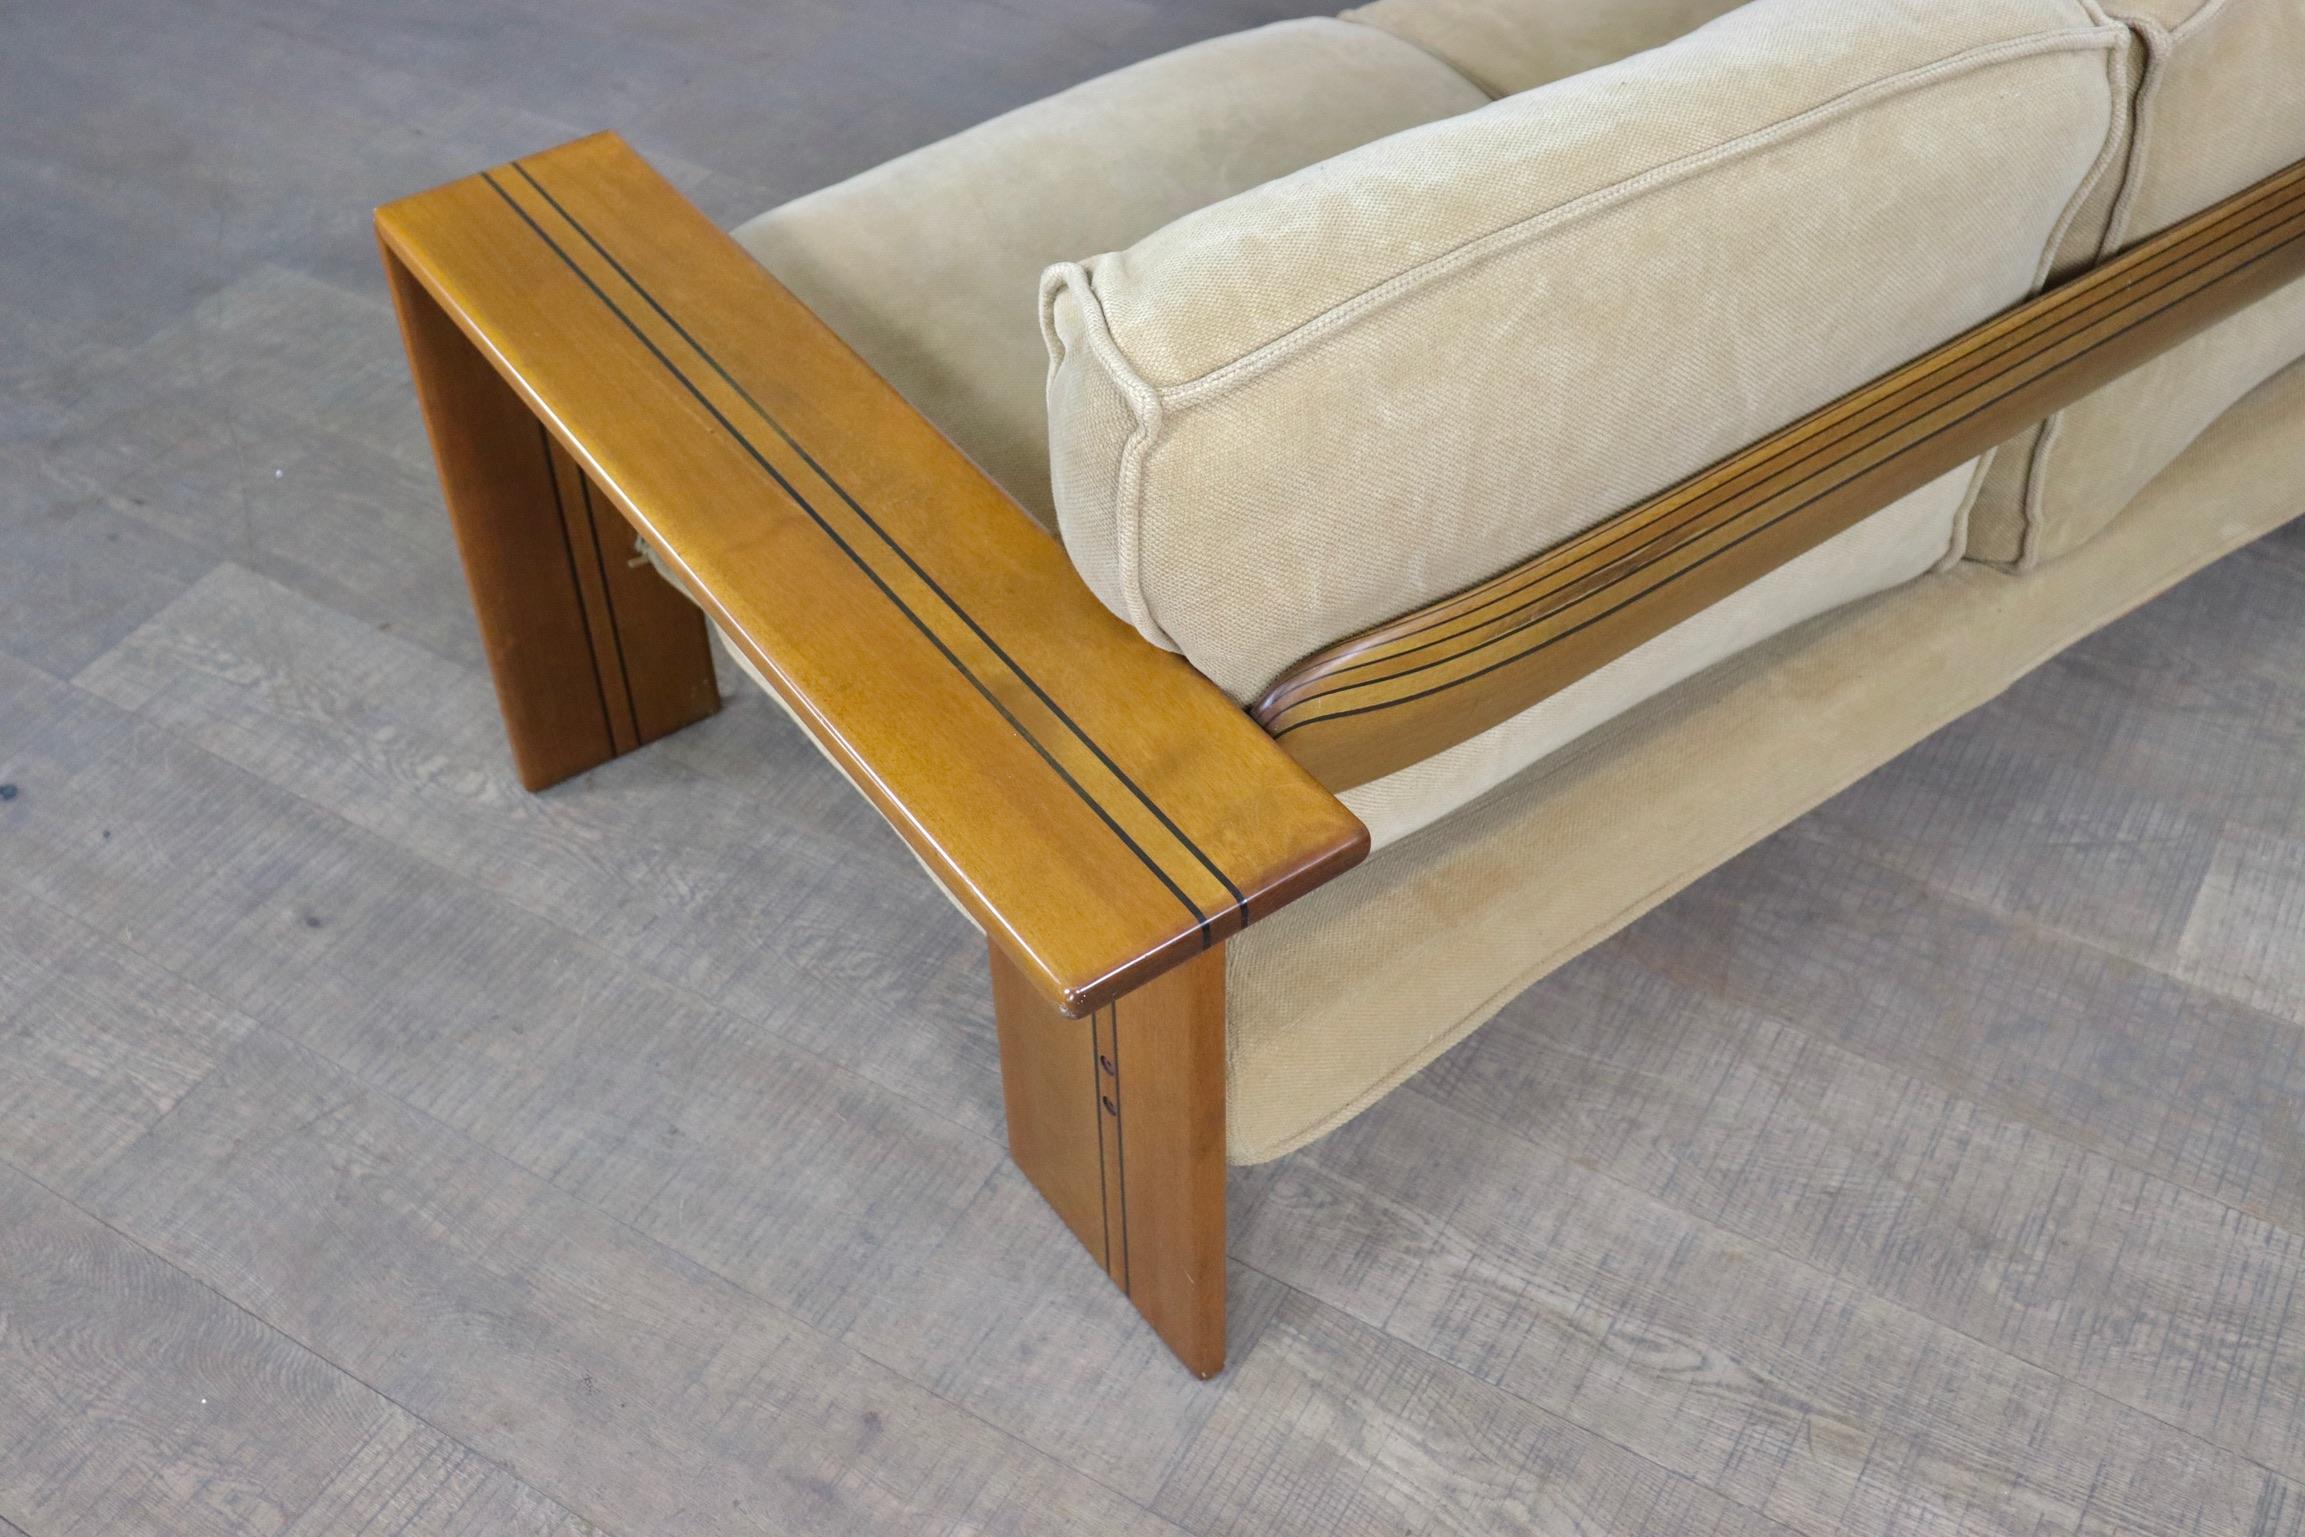 Afra & Tobia Scarpa ‘Artona’ Sofa in Elm and linen for Maxalto, 1975 For Sale 6